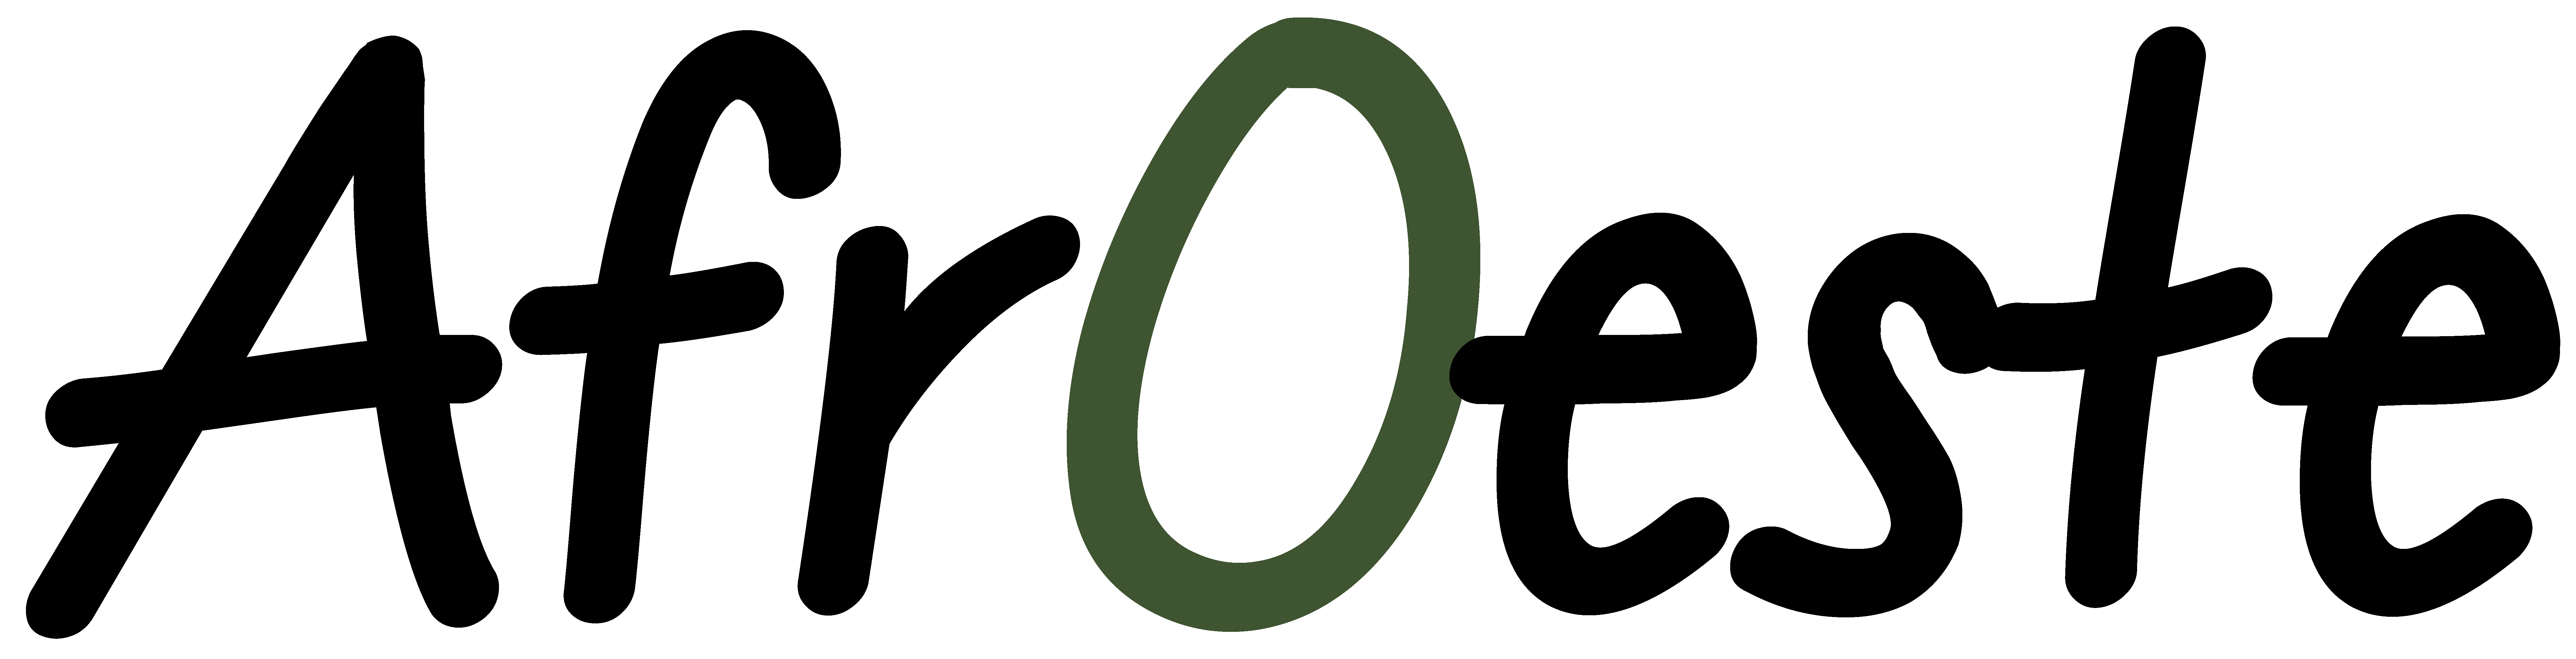 AfrOeste Logo transparente